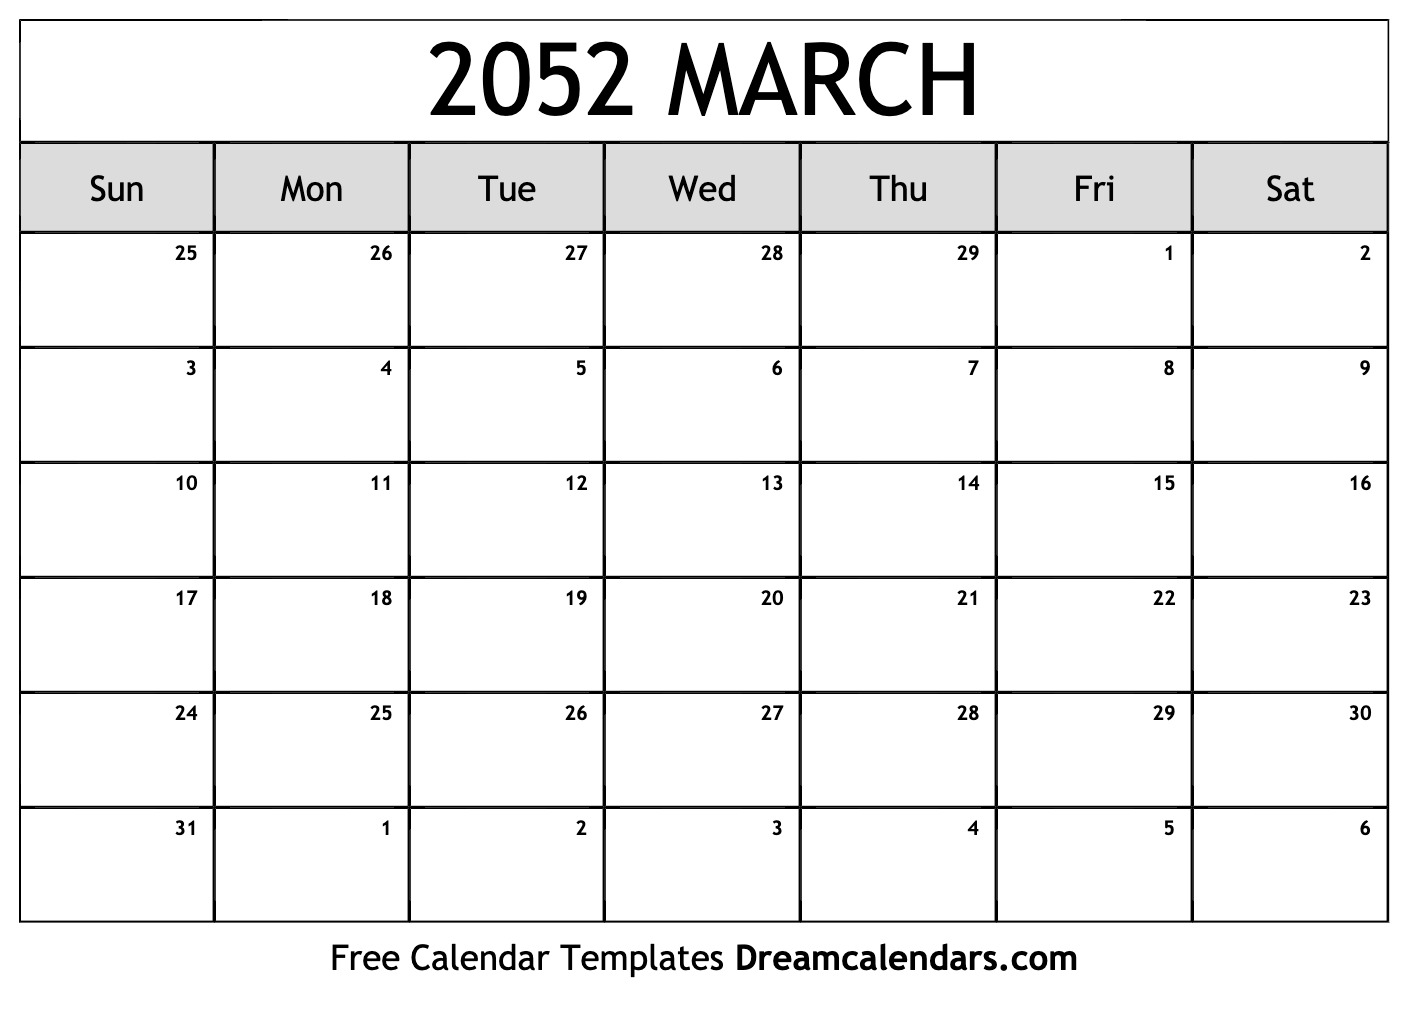 printable-2052-calendar-wikidates